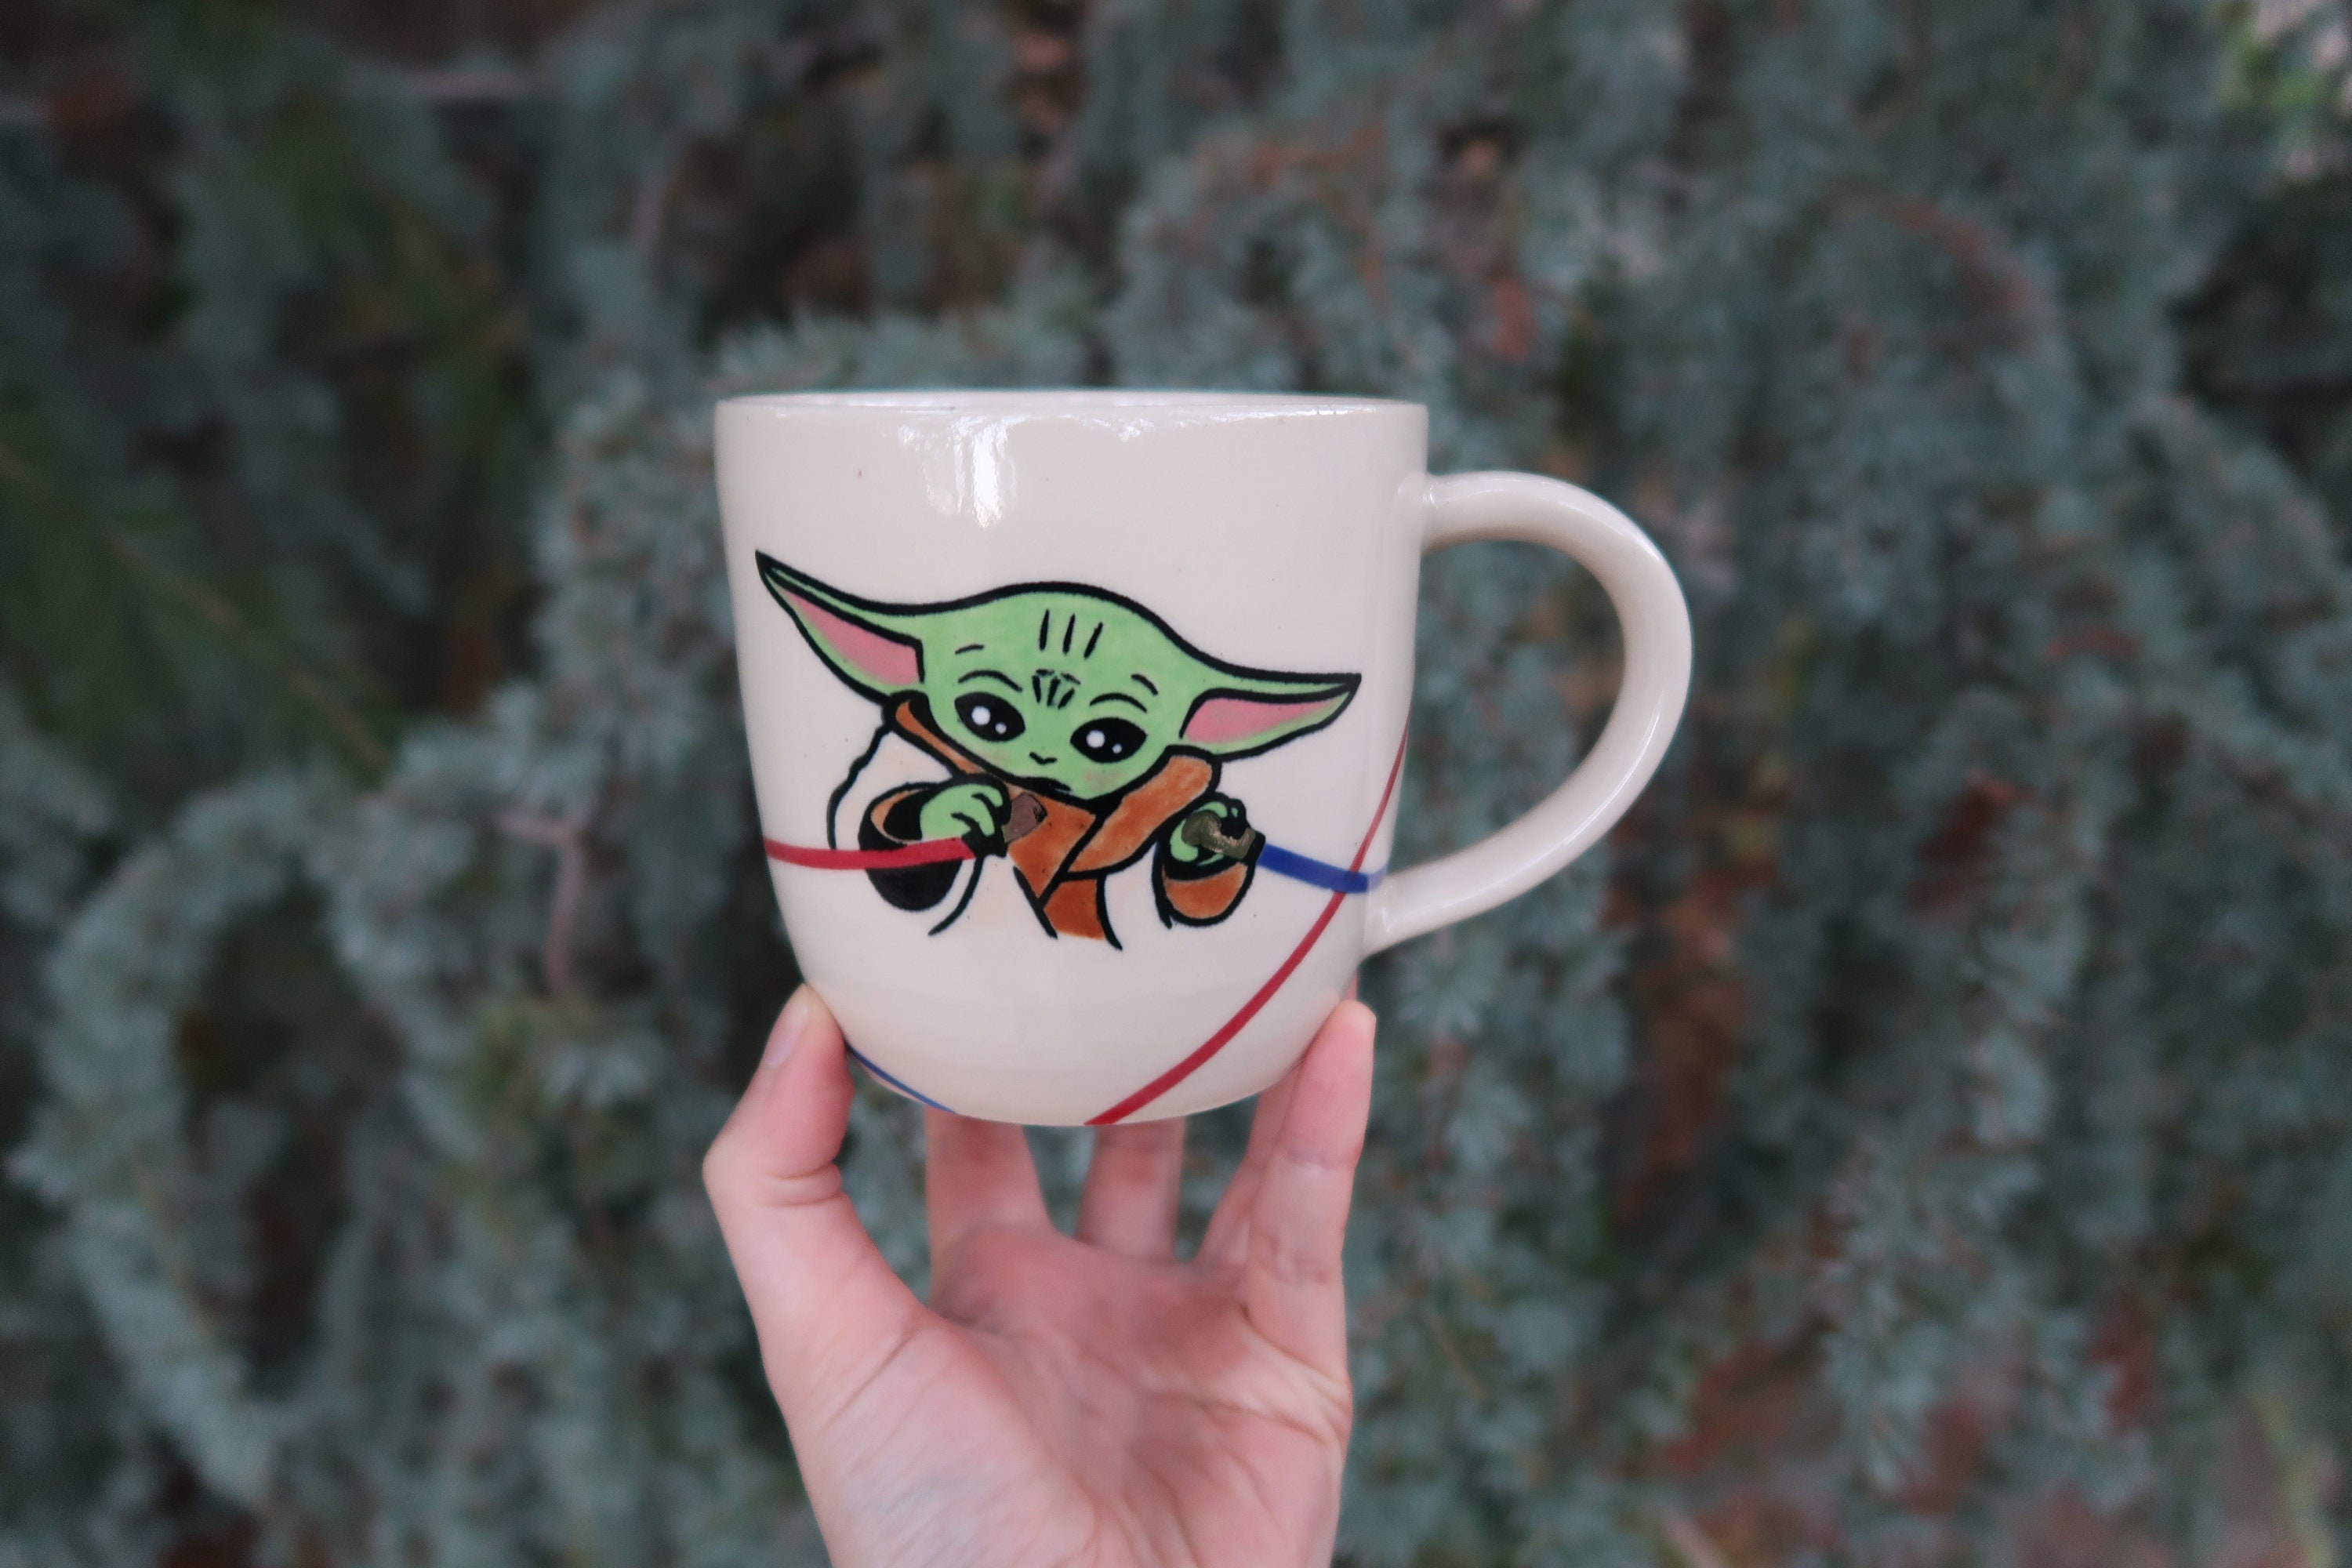 Grogu Coffee & Snacks Mug, Cute Grogu Mug, Grogu Coffee Mug, The  Mandalorian Mug, Baby Yoda Mug sold by Vast Coffee, SKU 42874953